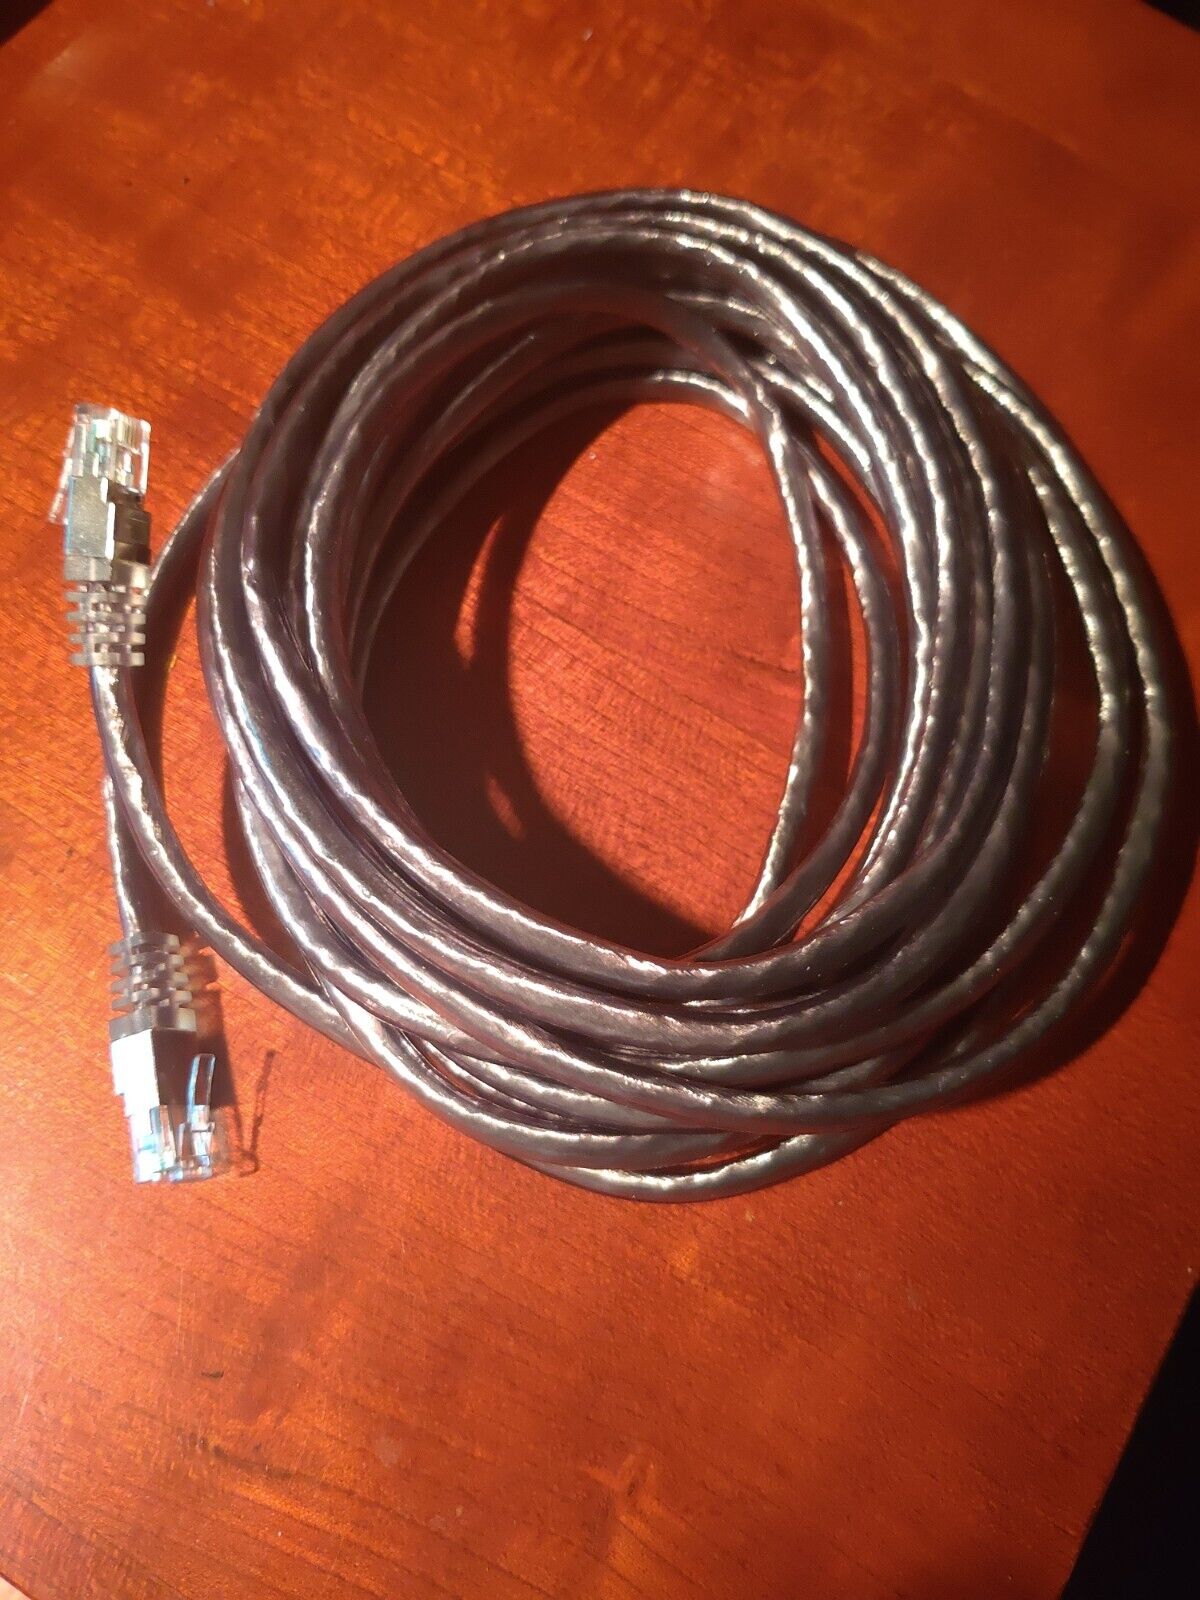 C2G 28723 RJ11 High-speed Internet Modem Ethernet Network Cable DSL 25' feet